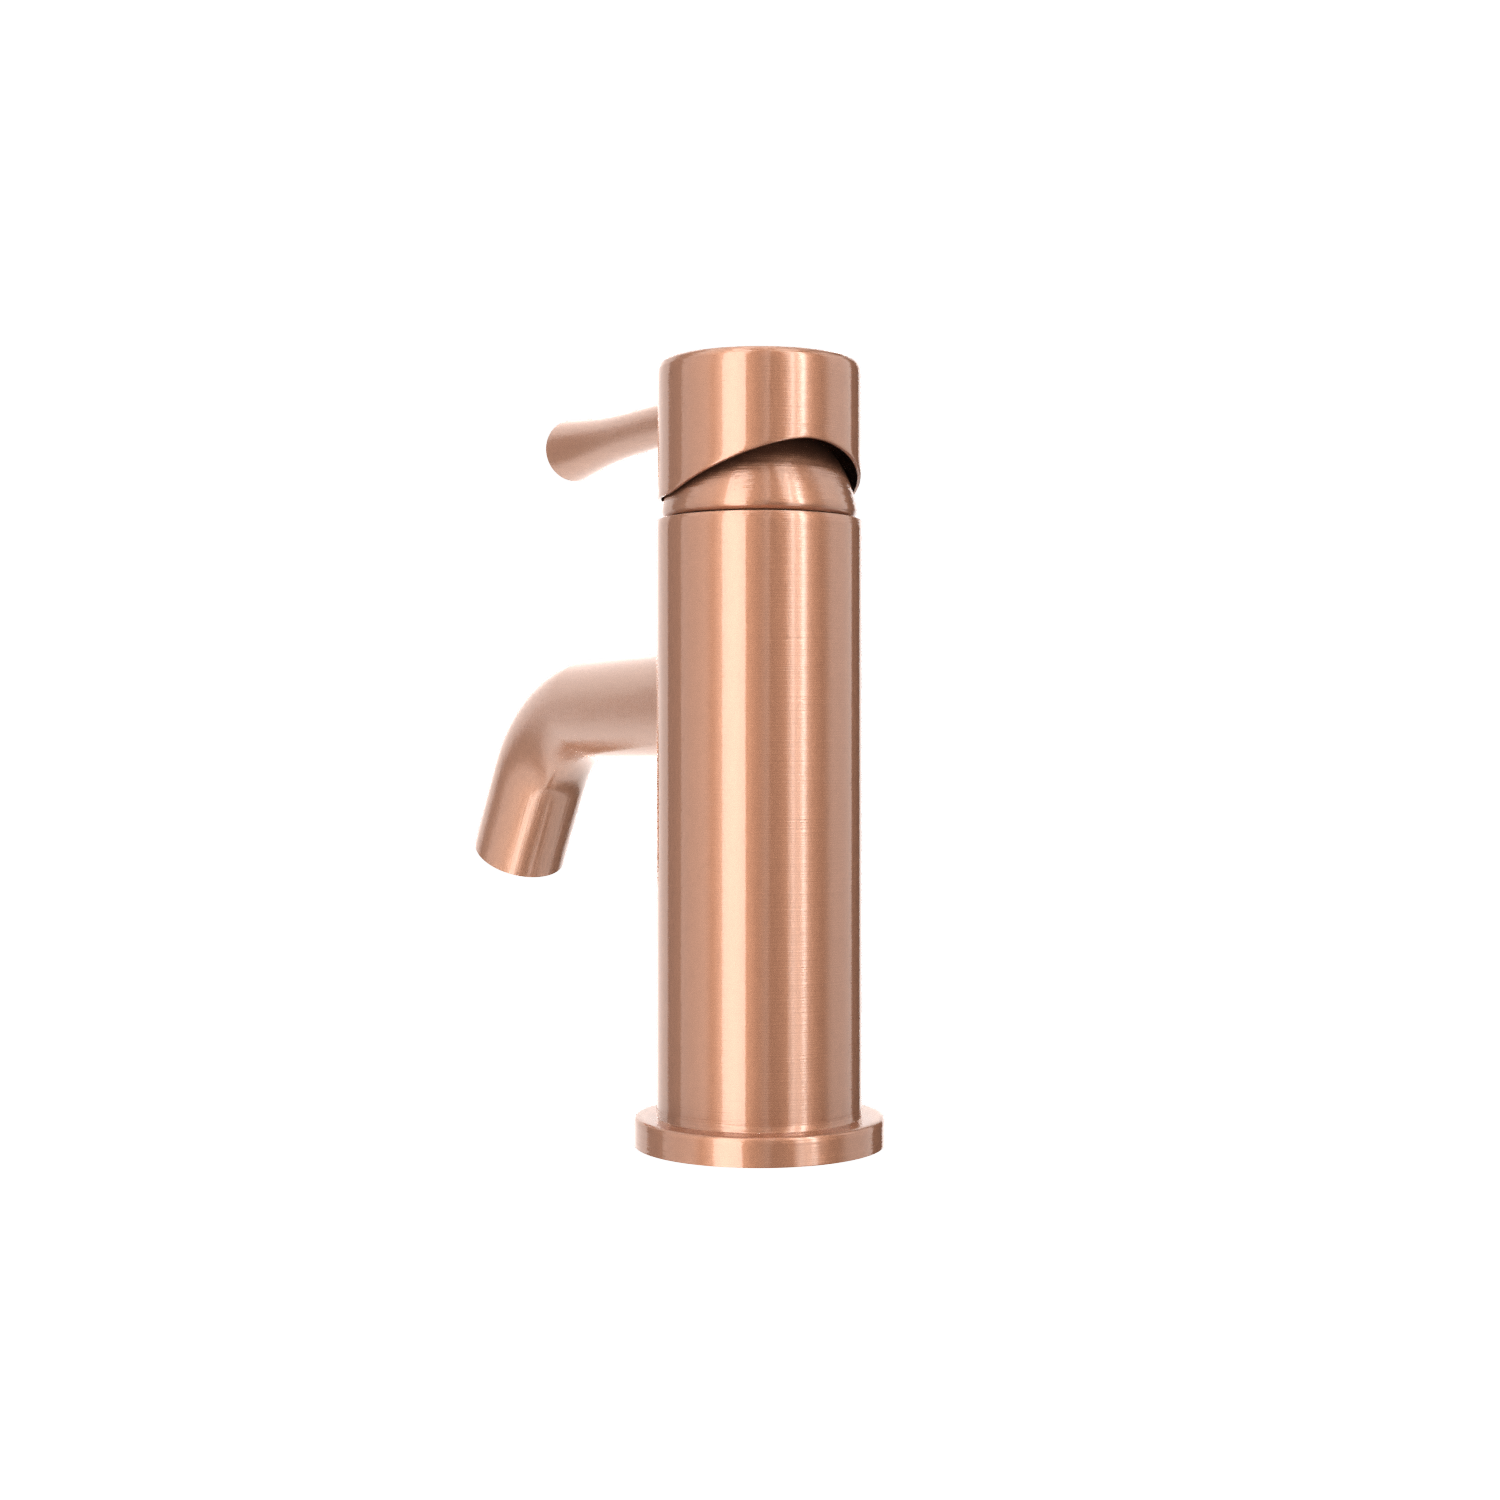 One-Handle Antiquqe Copper Bathroom Sink Faucet - AK40166-AC